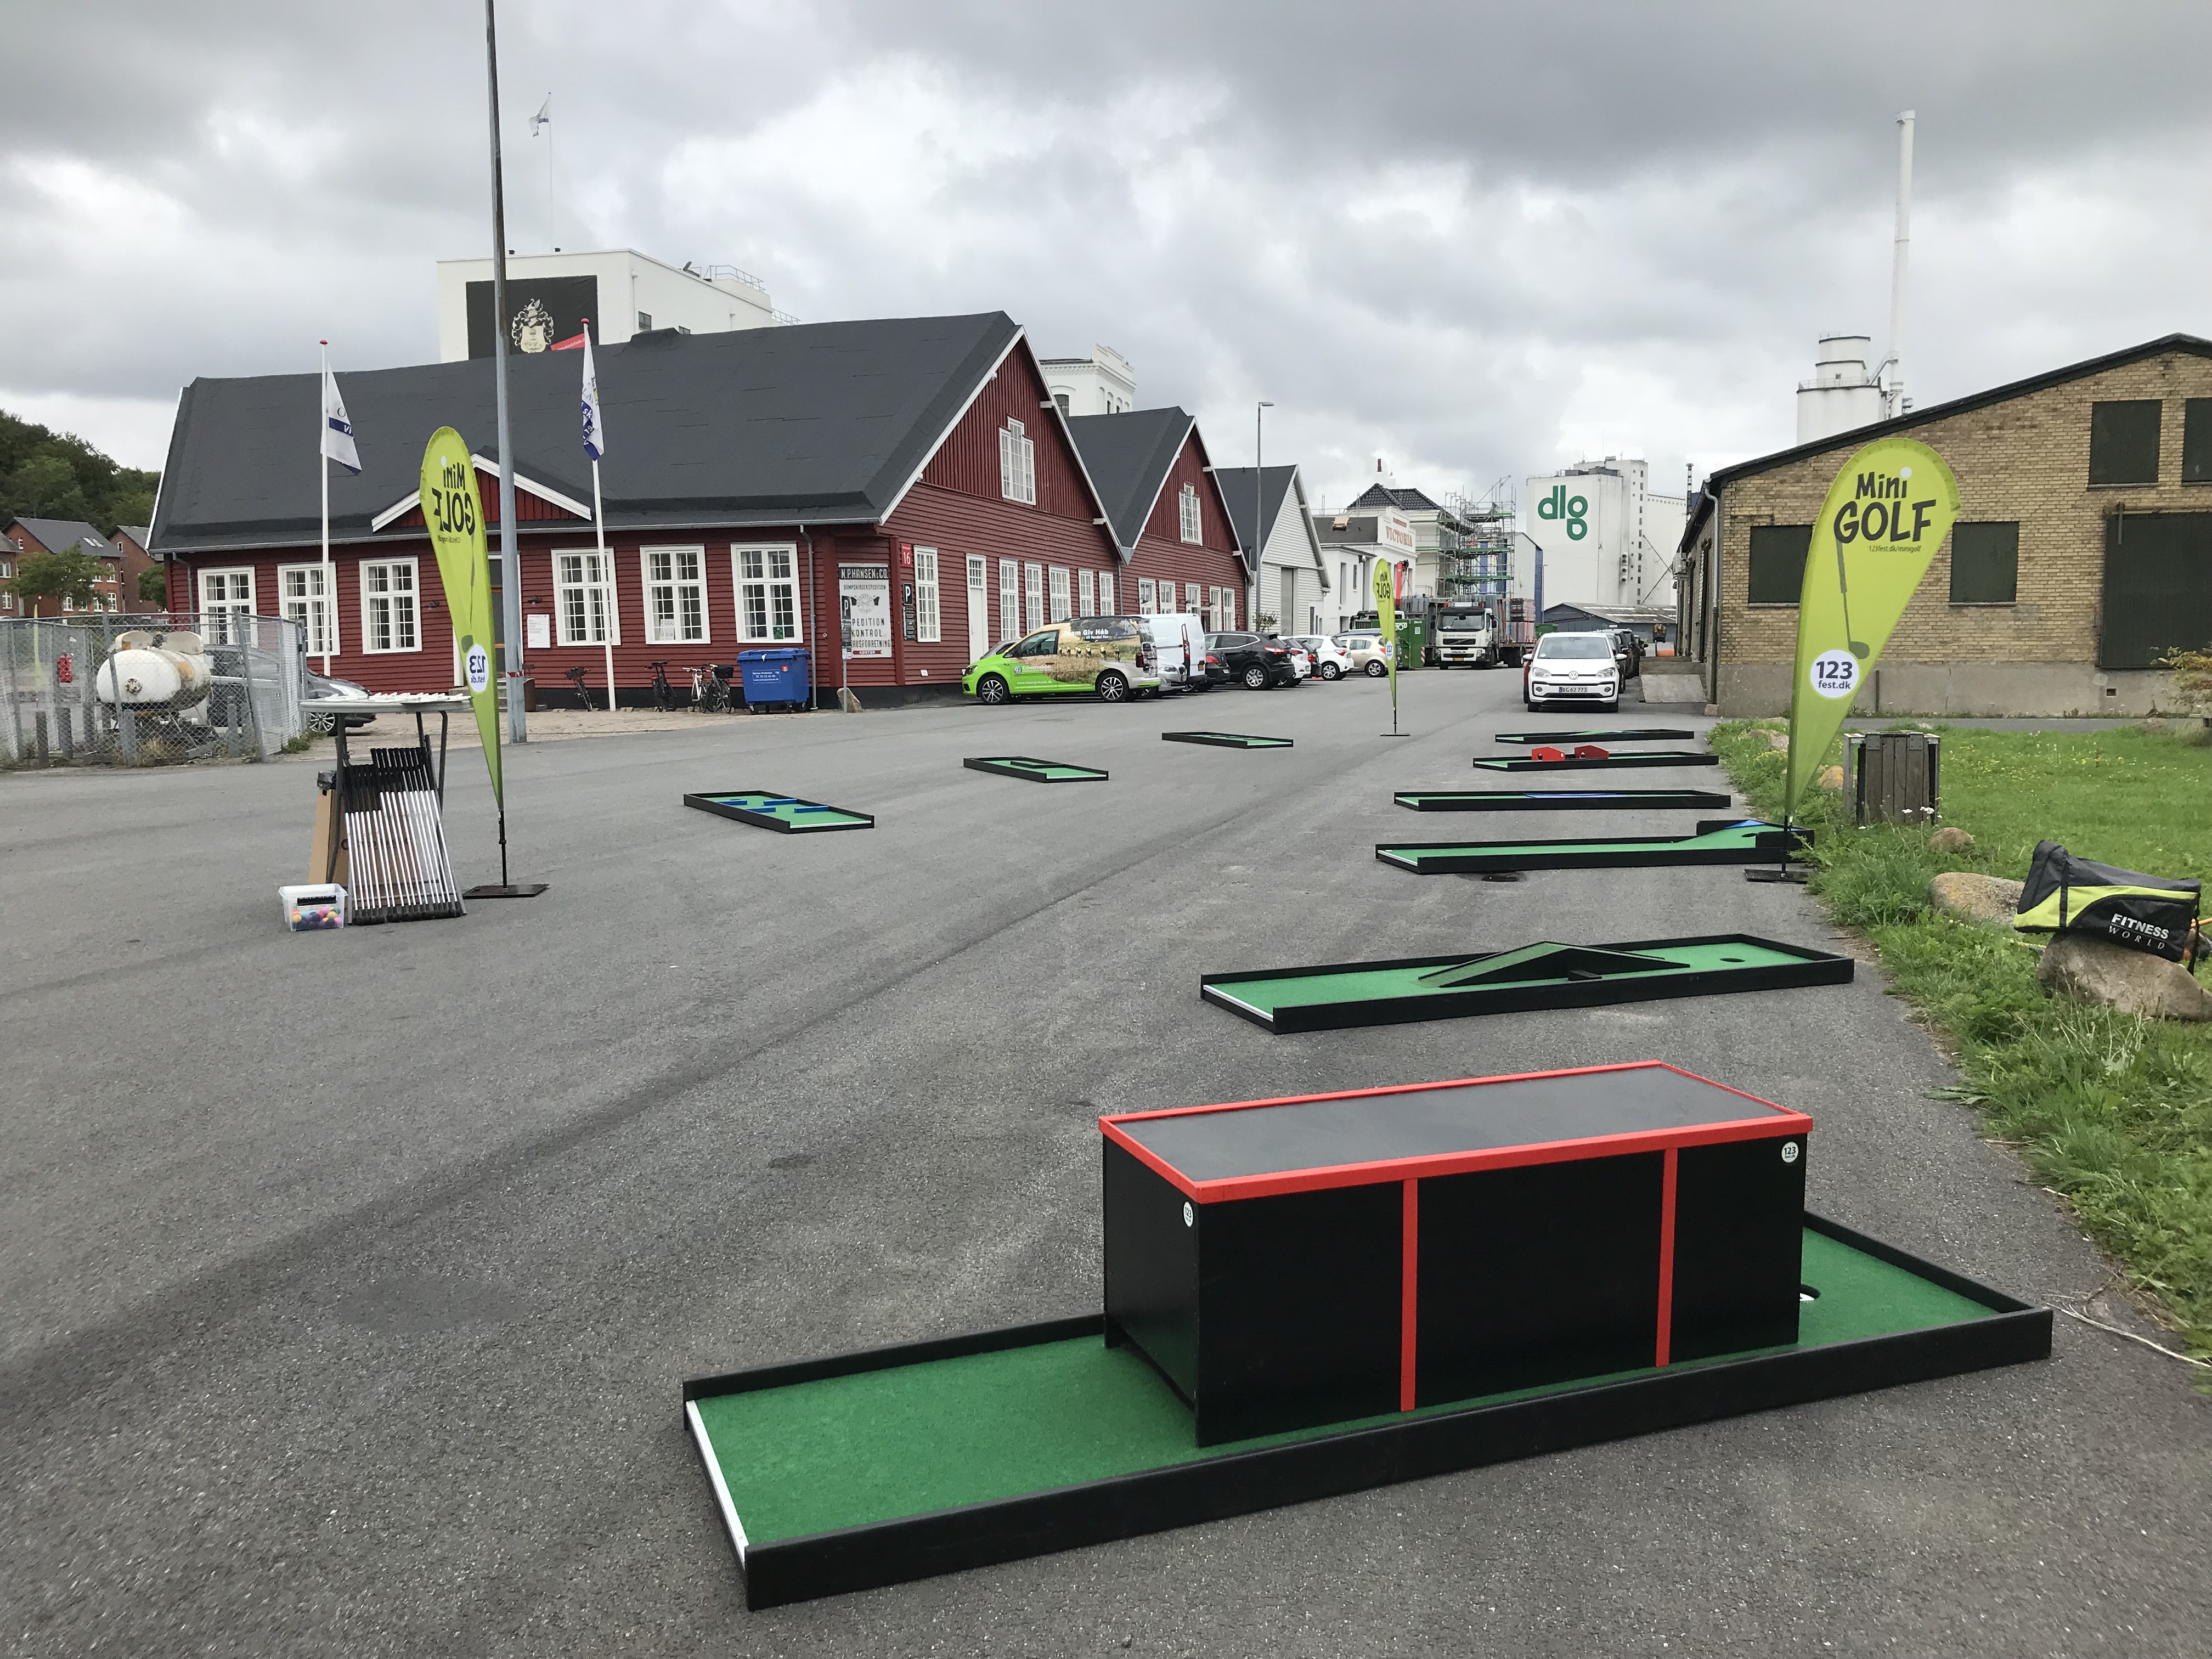 Minigolf event i Odense